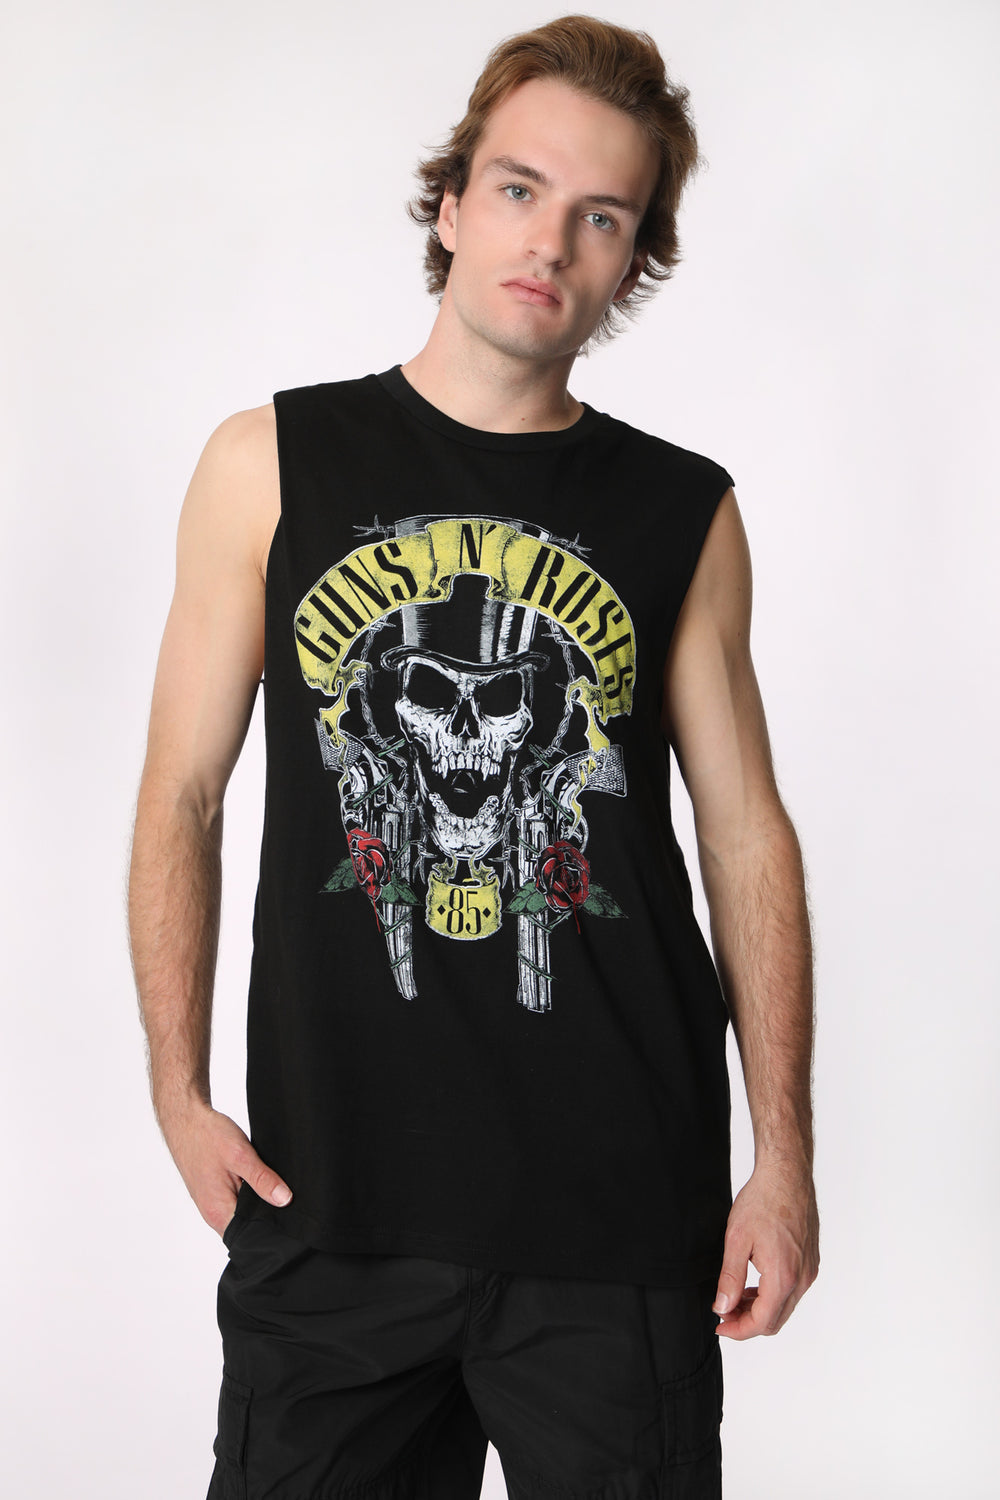 Camisole Imprimée Guns N' Roses Homme Camisole Imprimée Guns N' Roses Homme